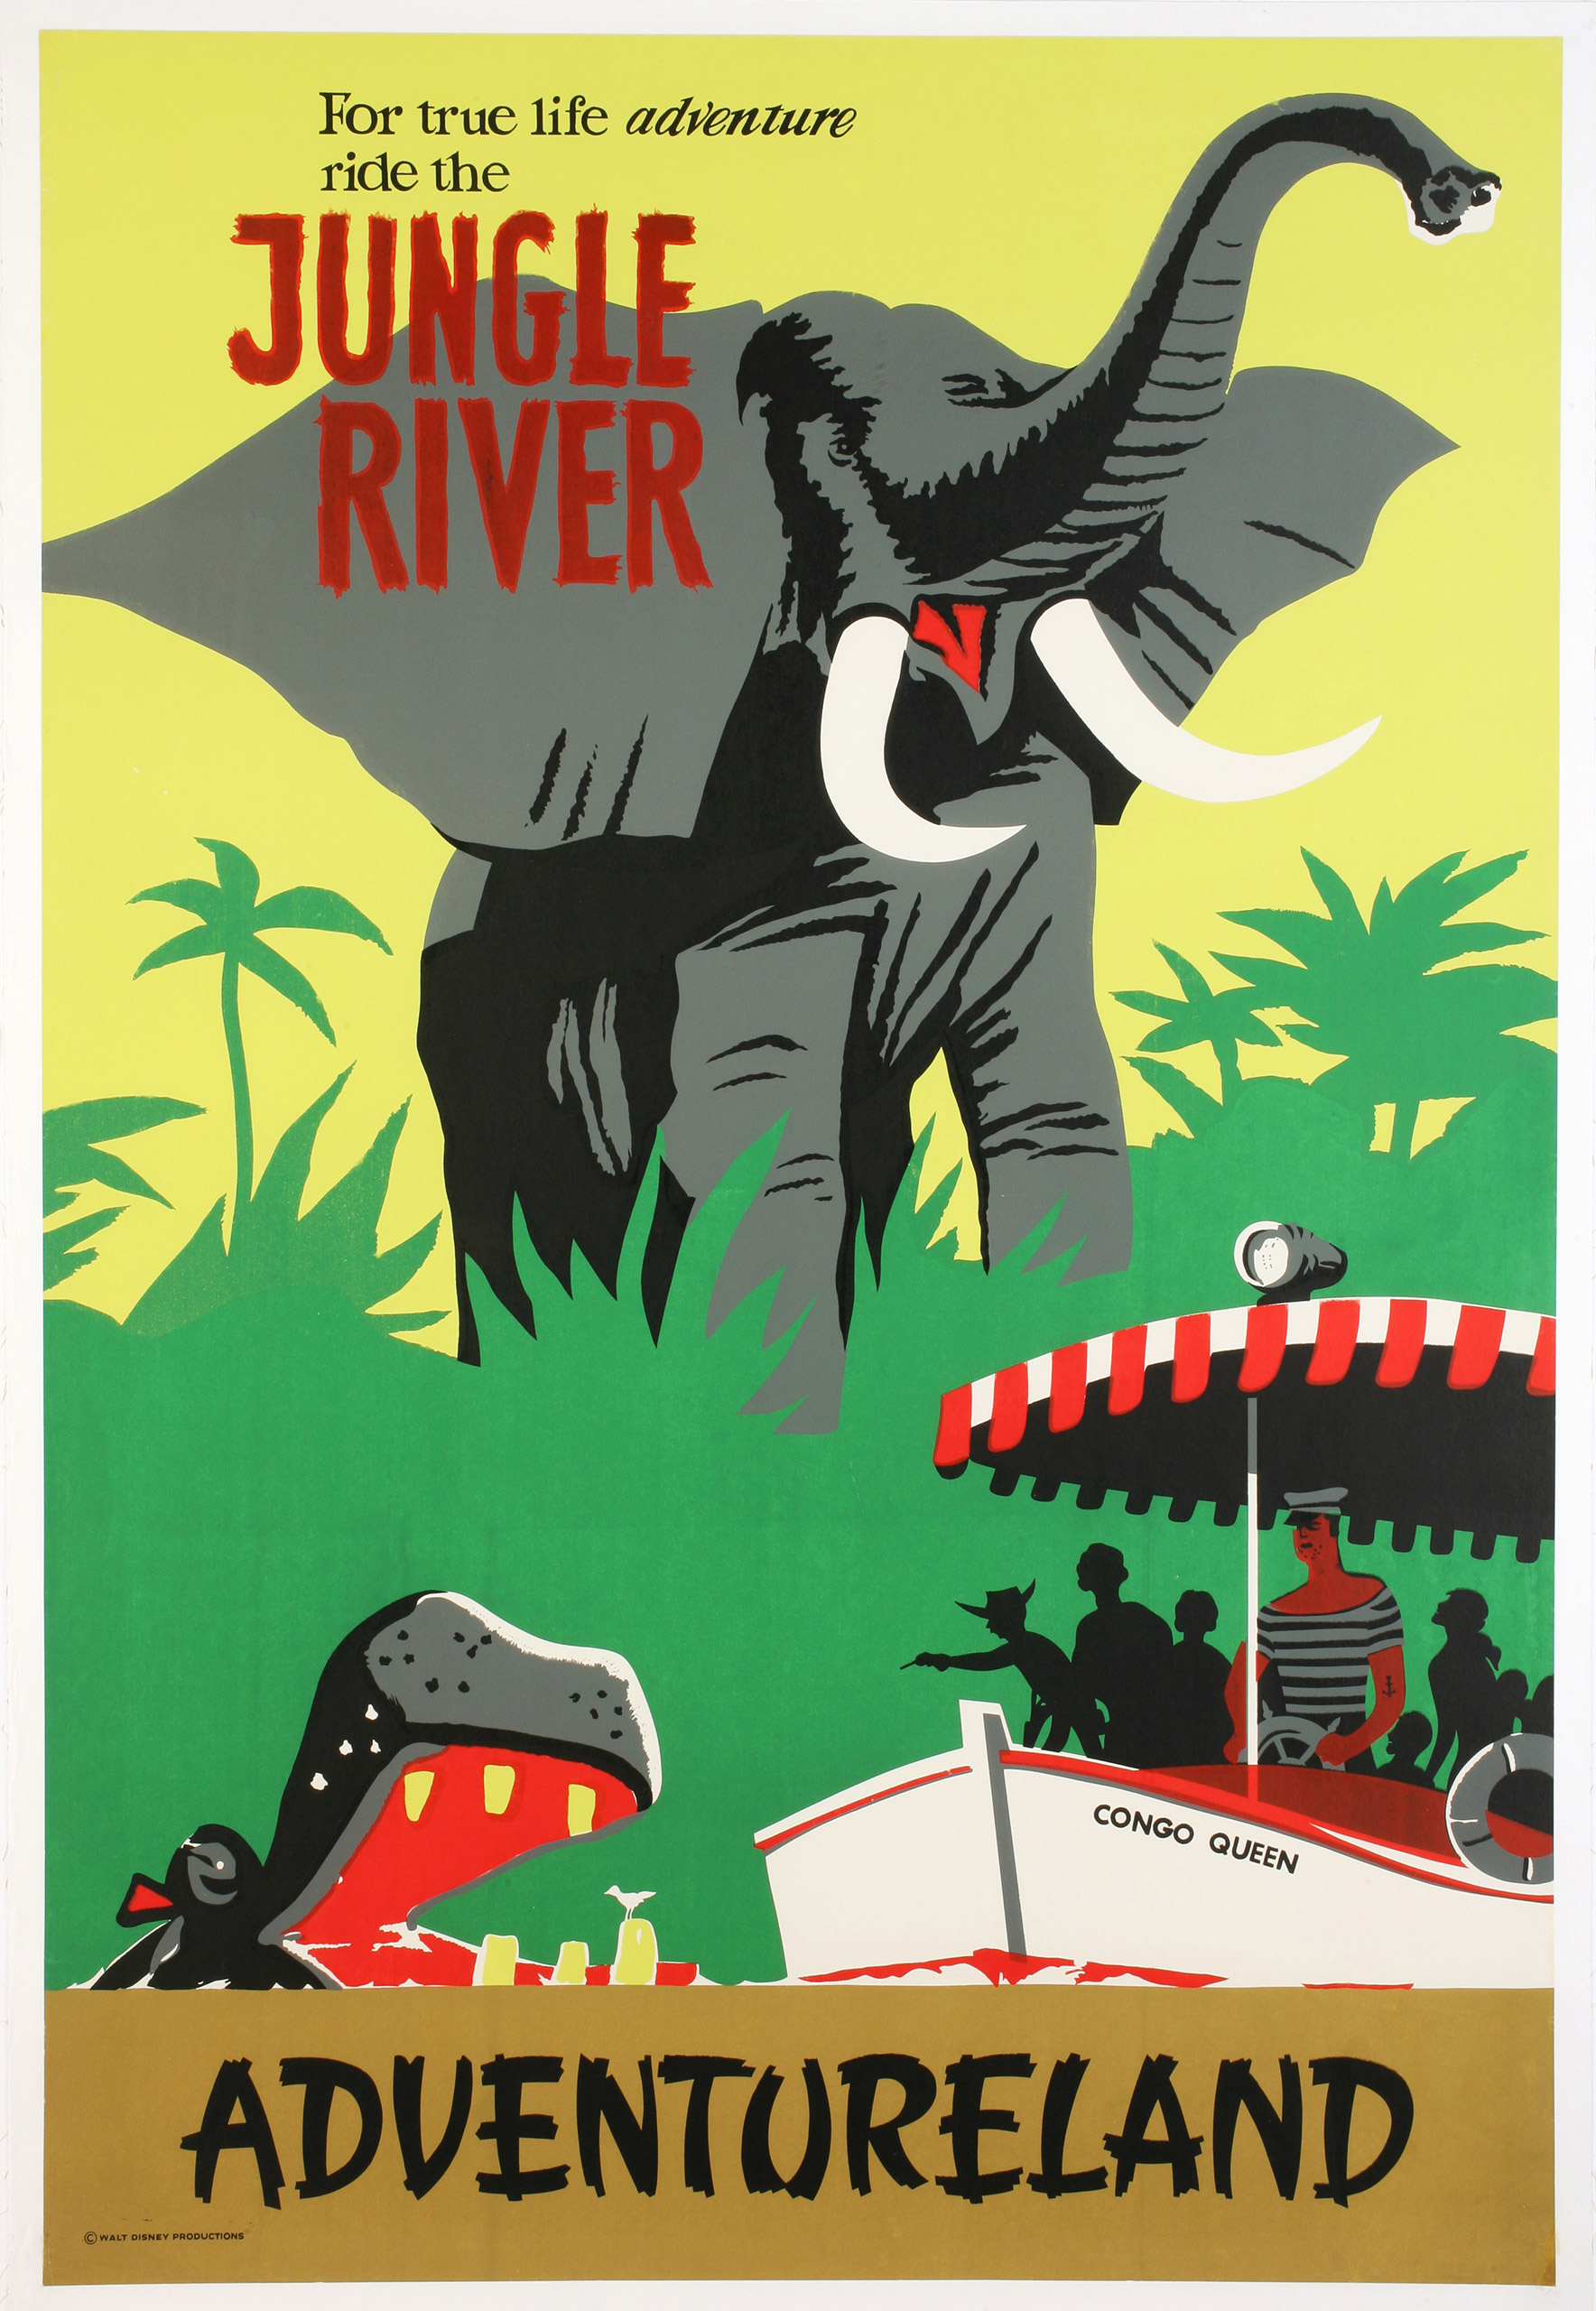 Original Disneyland "Jungle River" Attraction Poster. Disneyland, 1956.